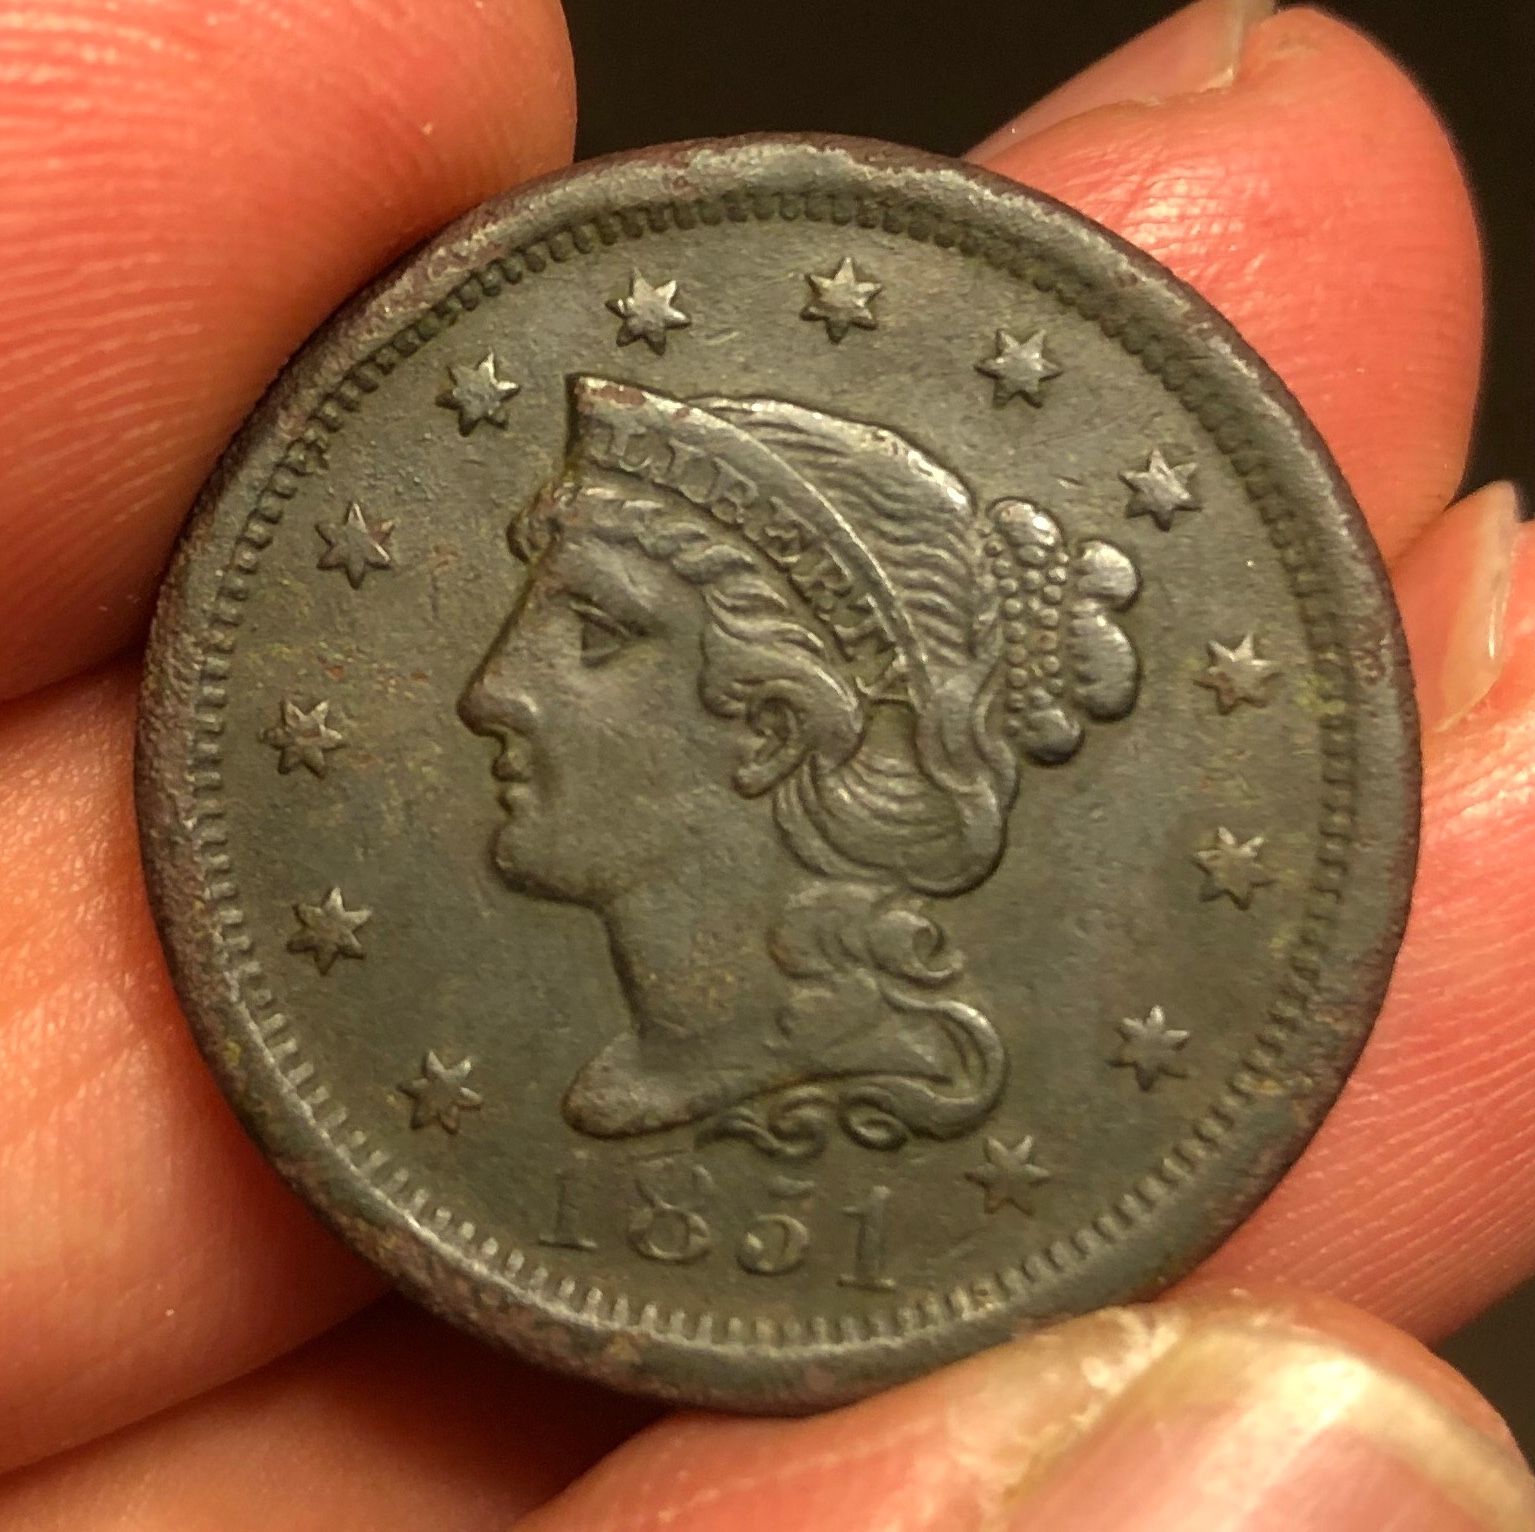 1851 Large Cent
OBVERSE